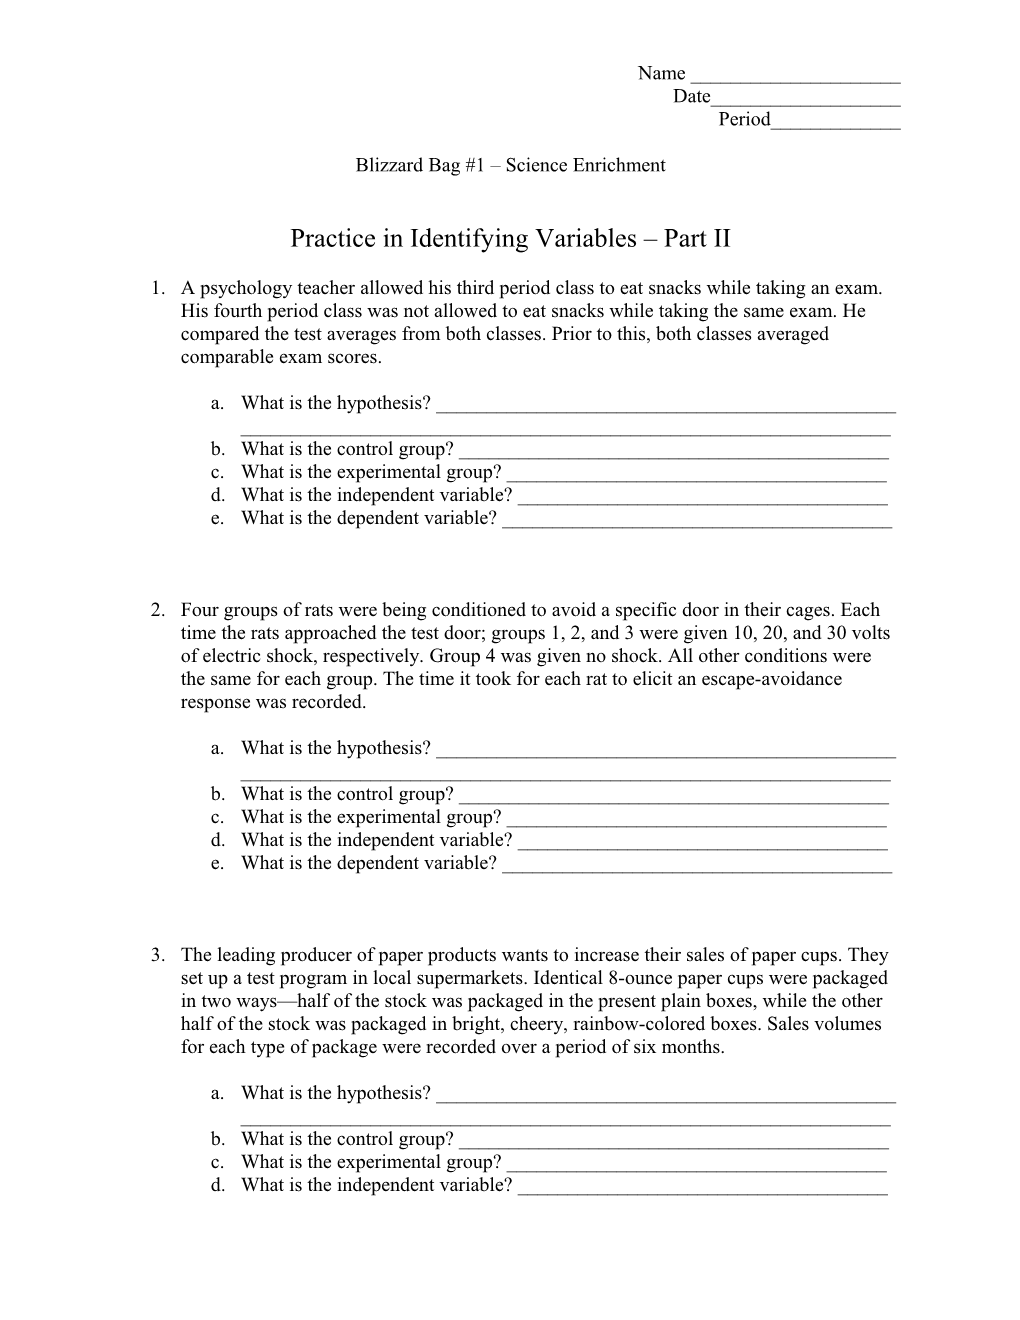 Practice in Identifying Variables Part II